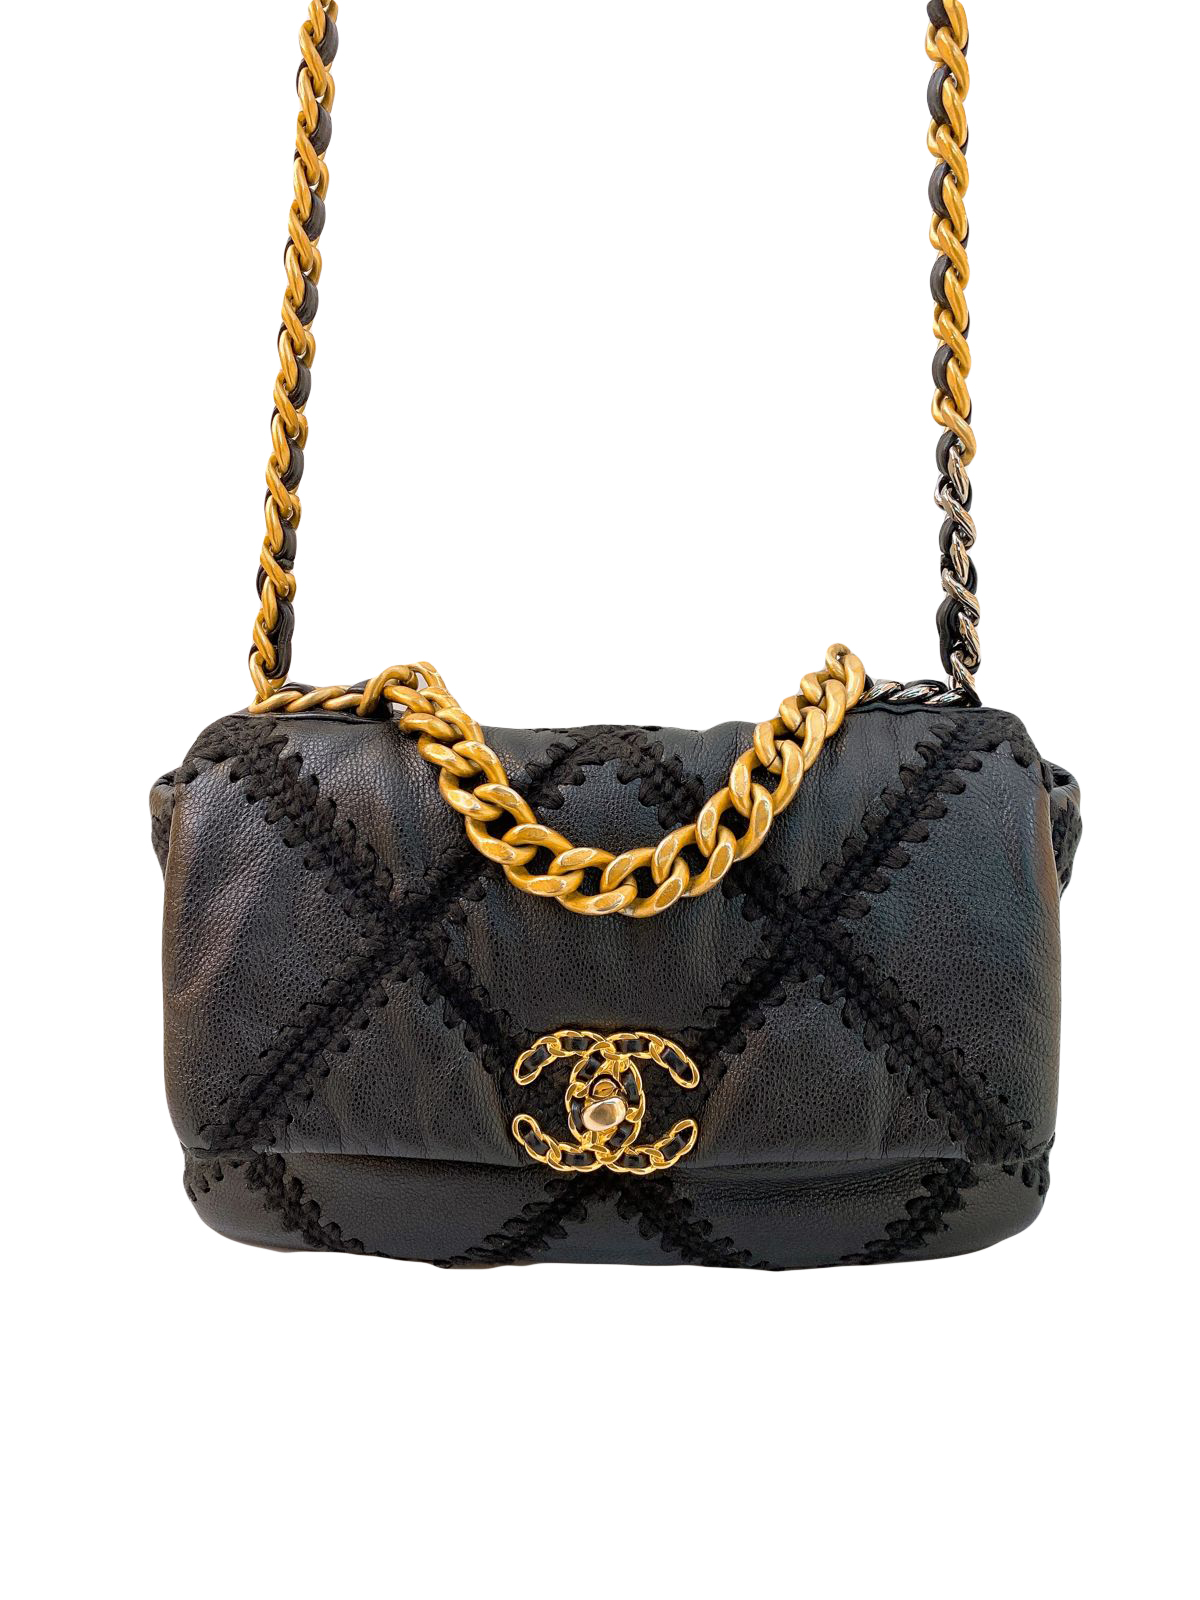 Chanel 19 leather handbag Chanel Black in Leather - 26121112